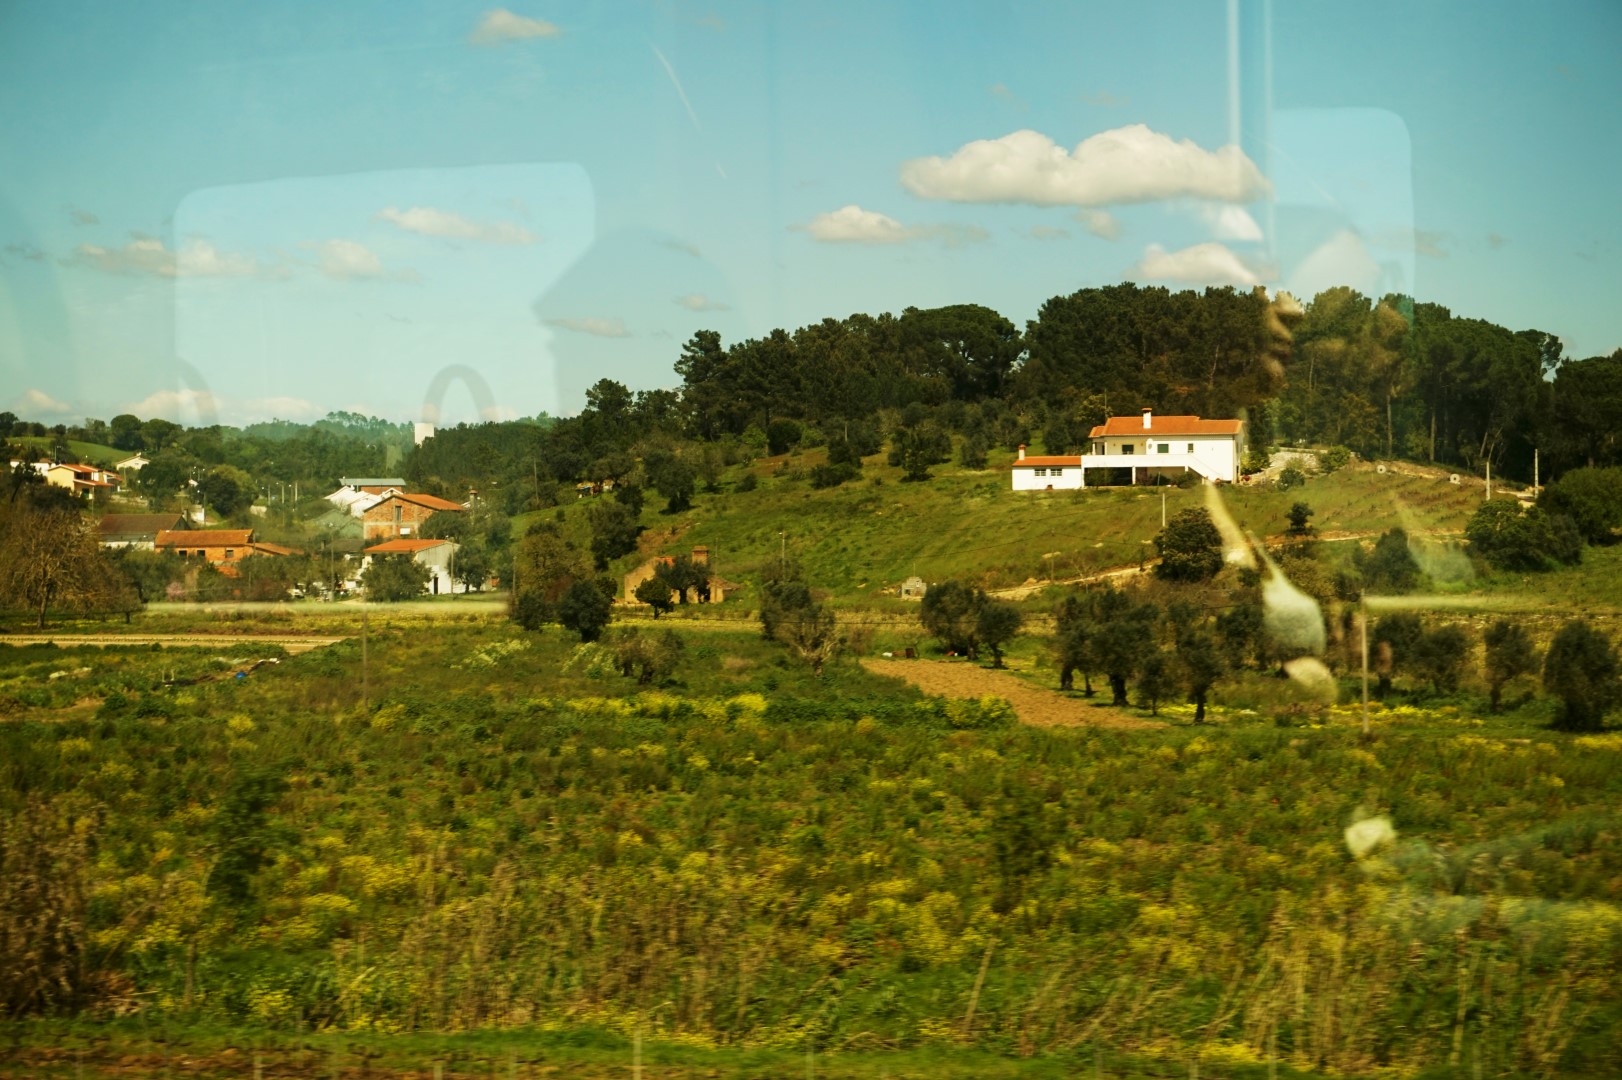 Railtrip au Portugal - De Coimbra à Tomar